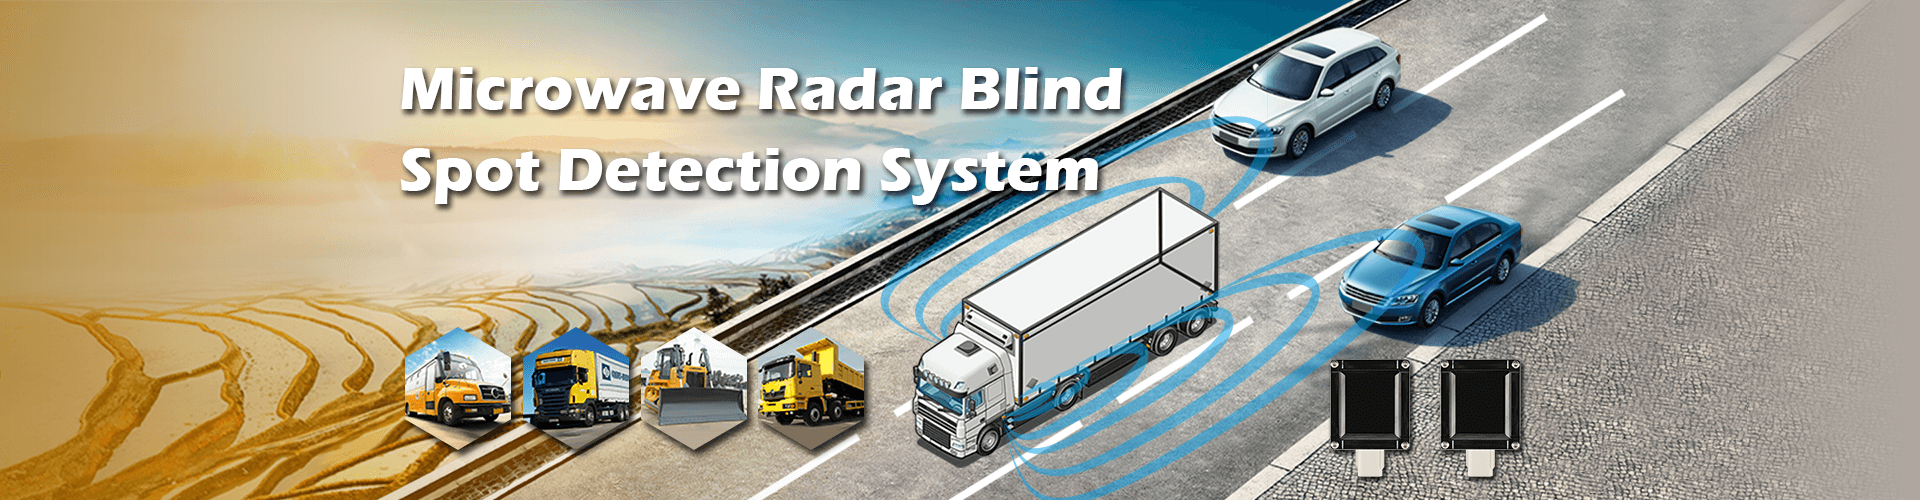 24G/77G Microwave radar blind spot detection system